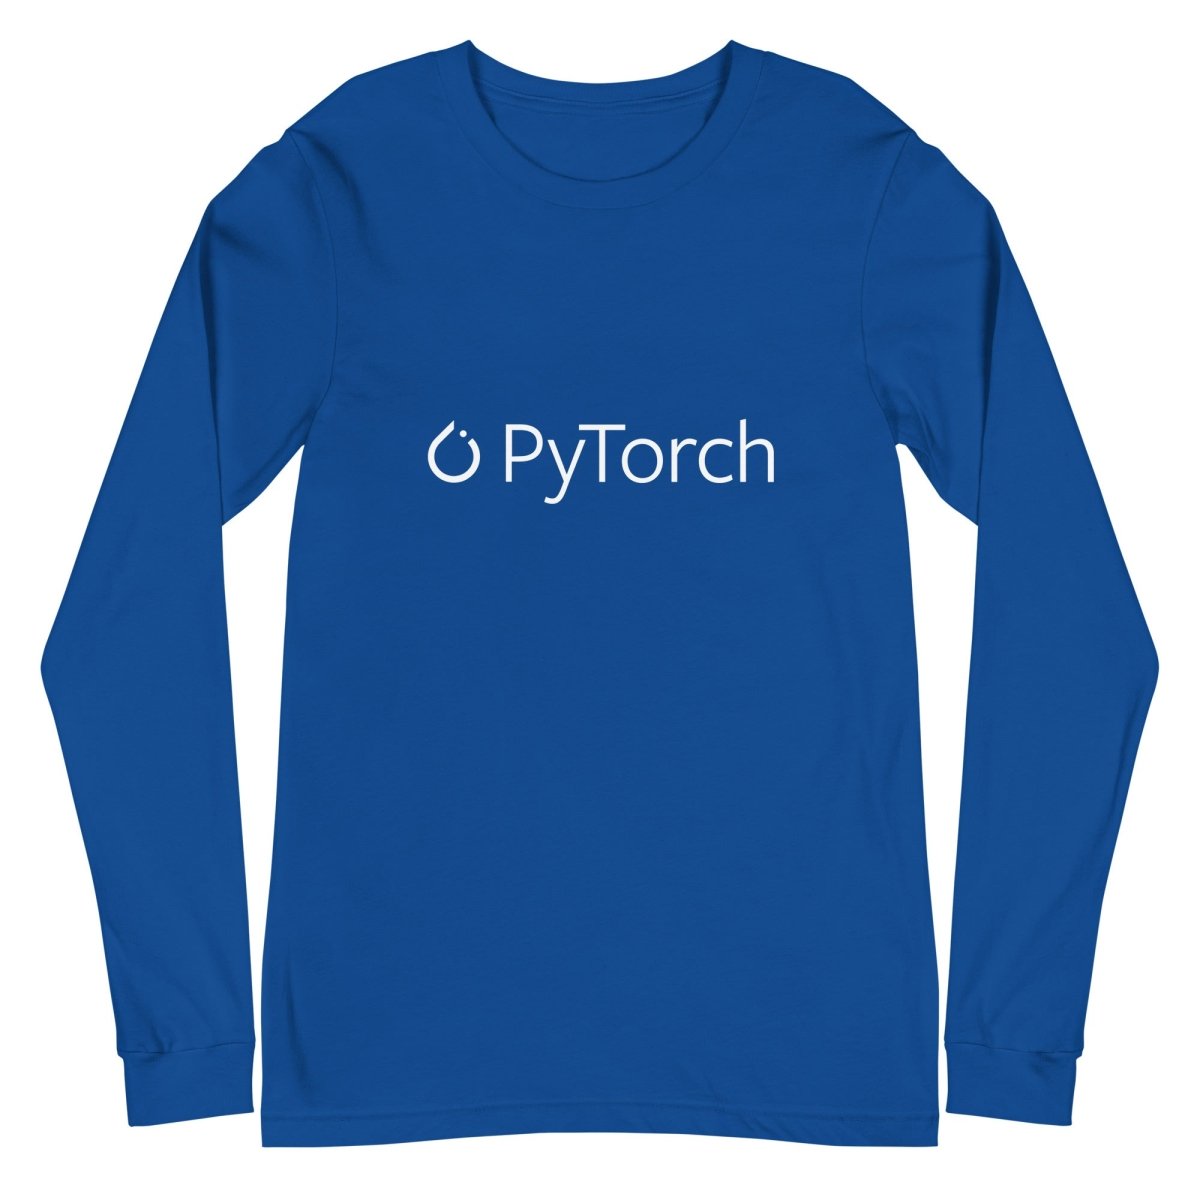 PyTorch White Logo Long Sleeve T - Shirt (unisex) - True Royal - AI Store